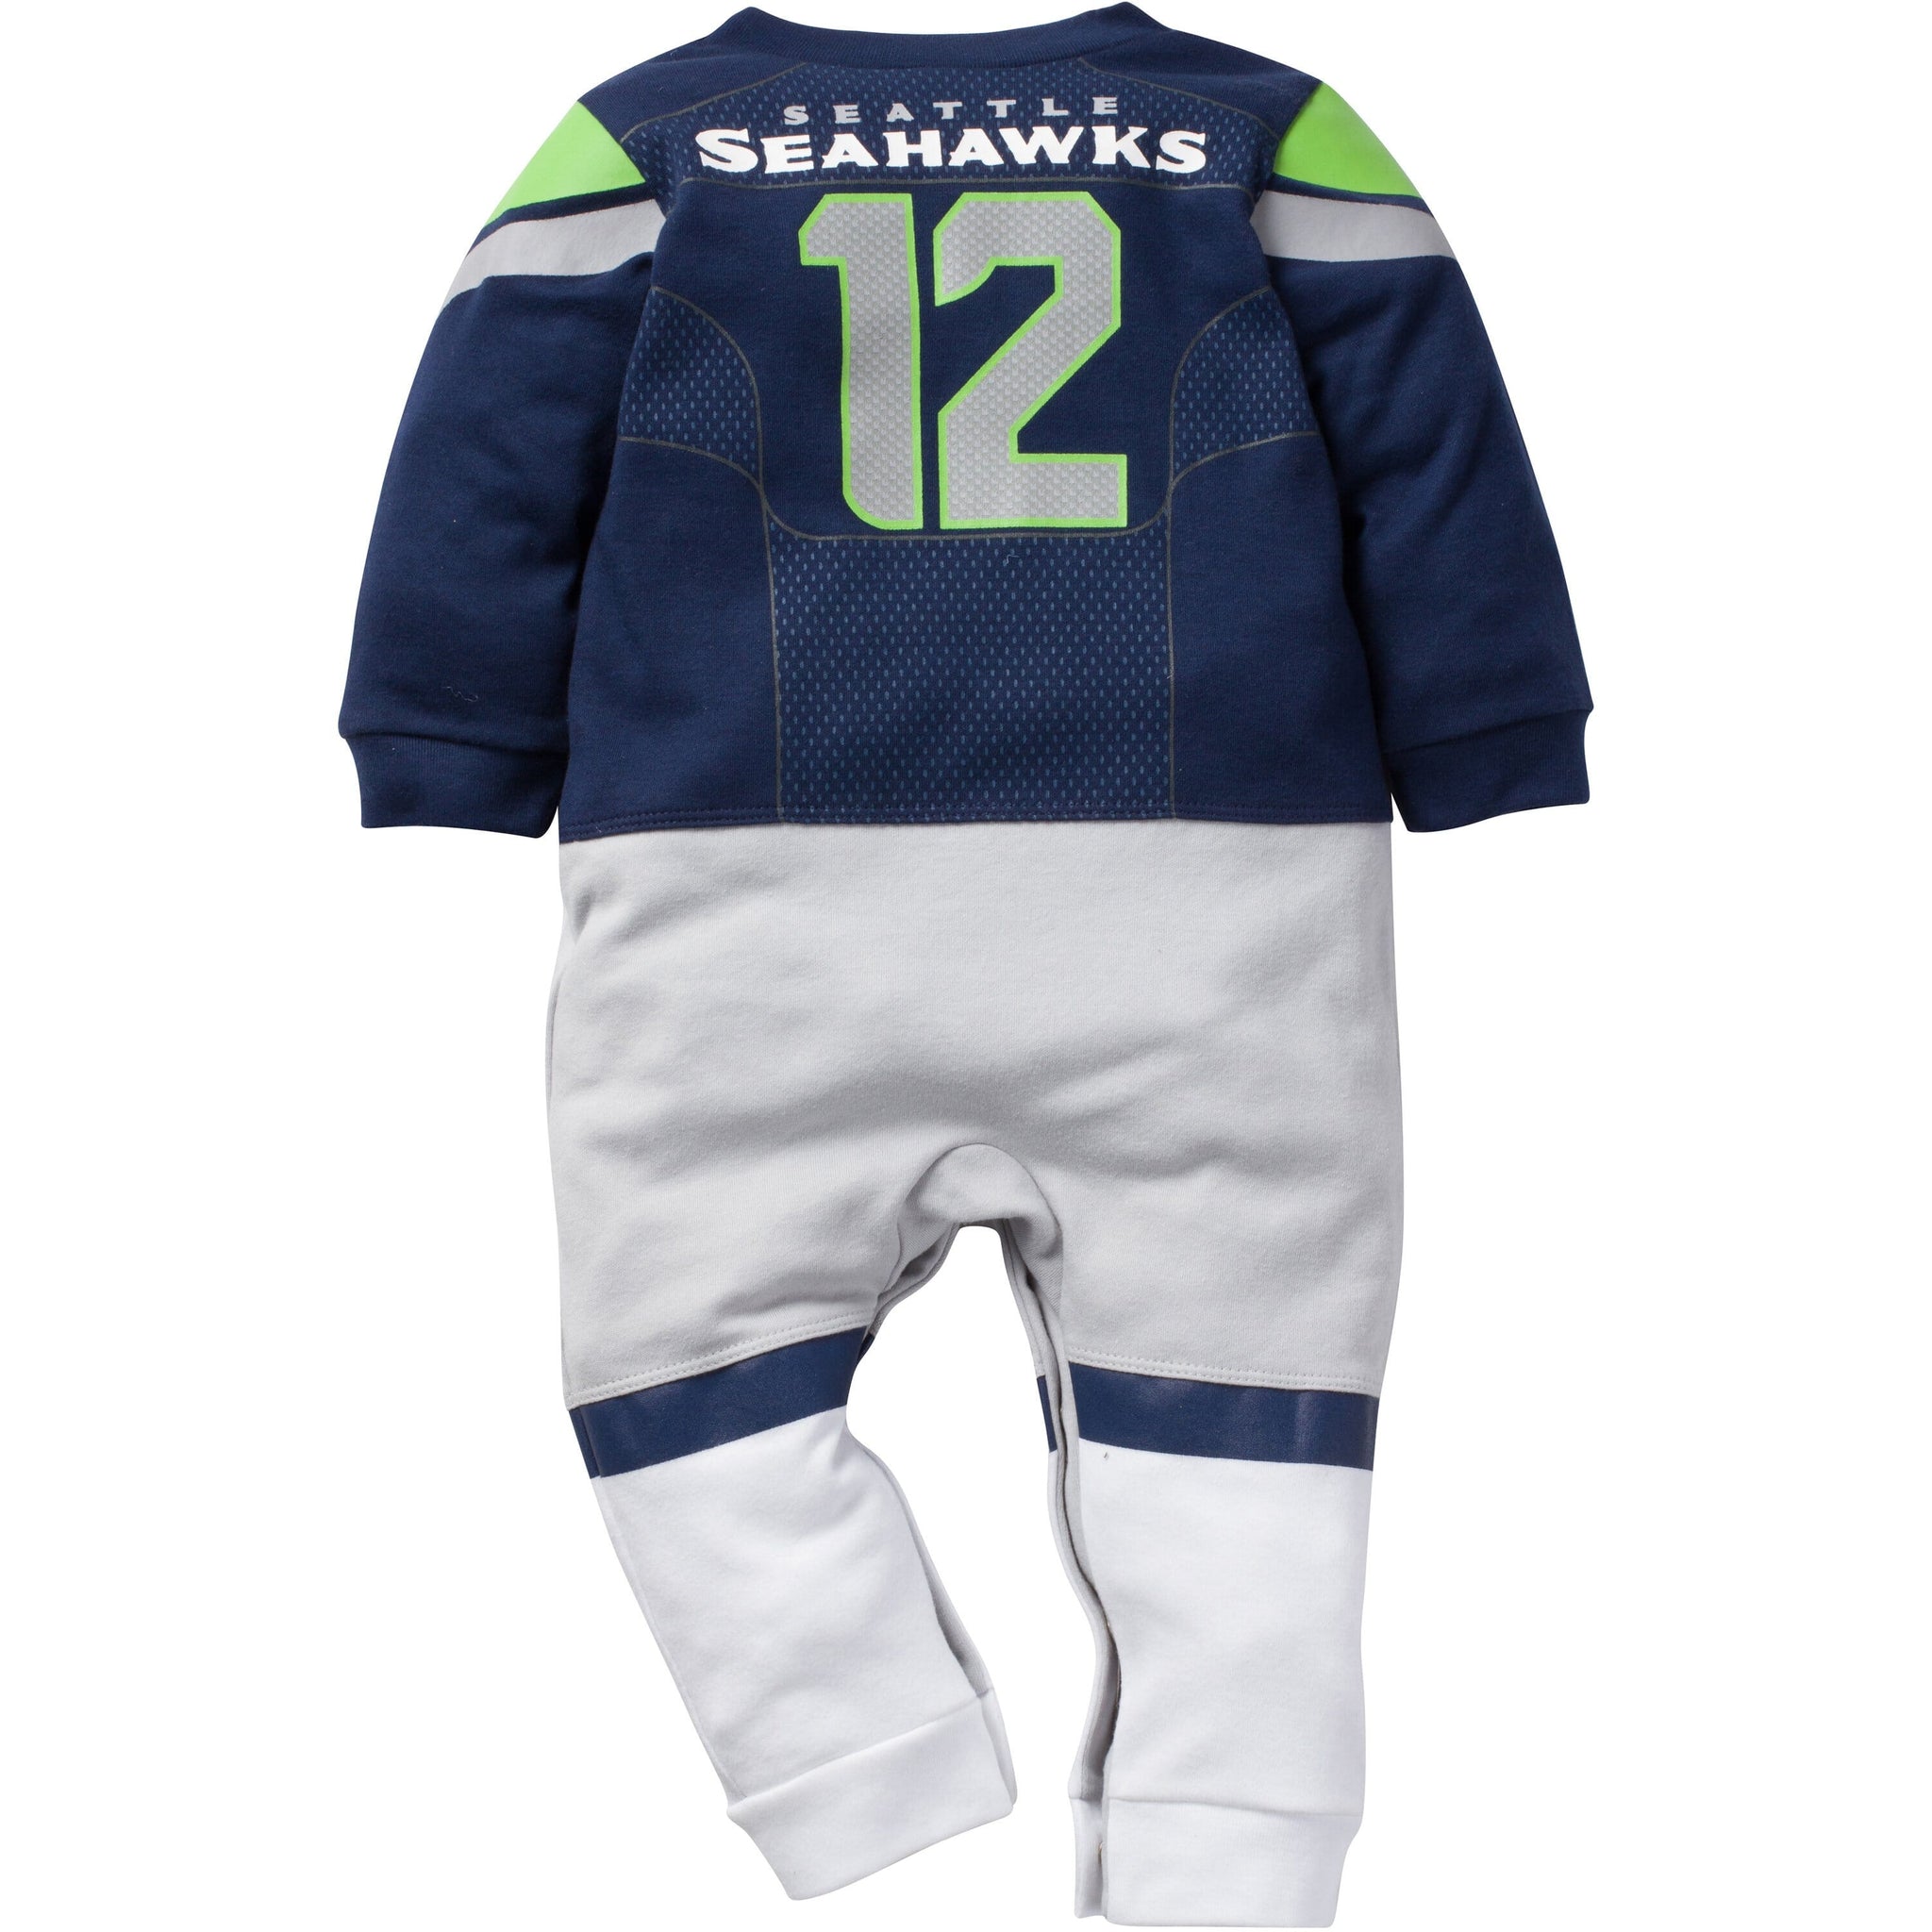 seahawks baby clothes amazon